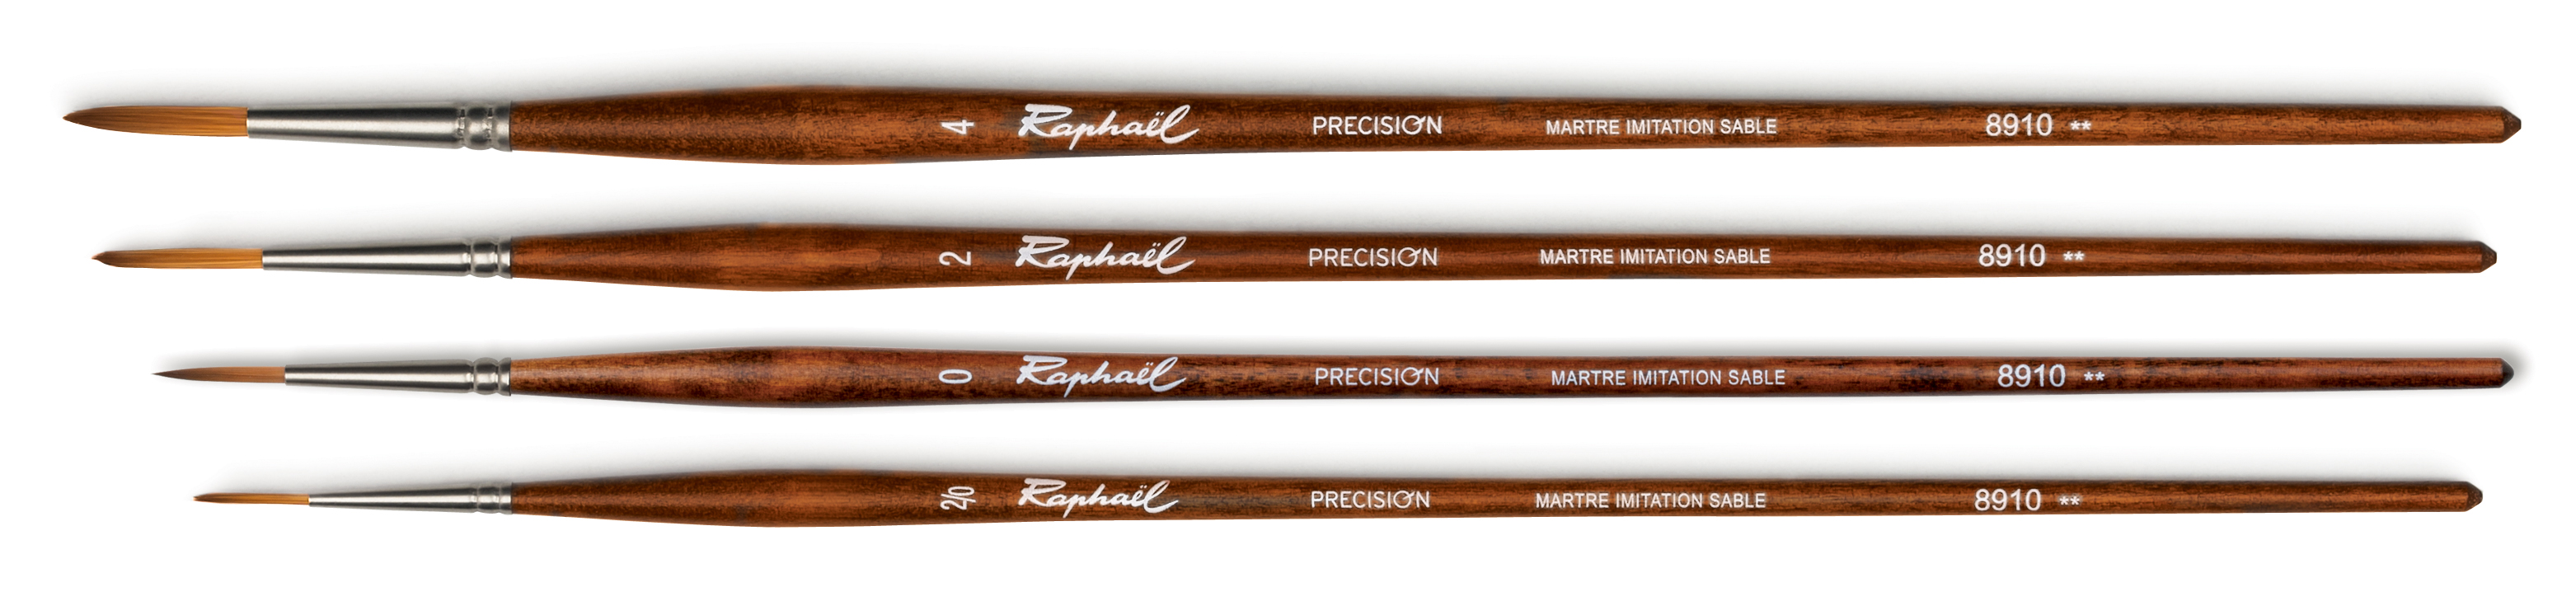 Raphael Acrylpinsel Precision 8910